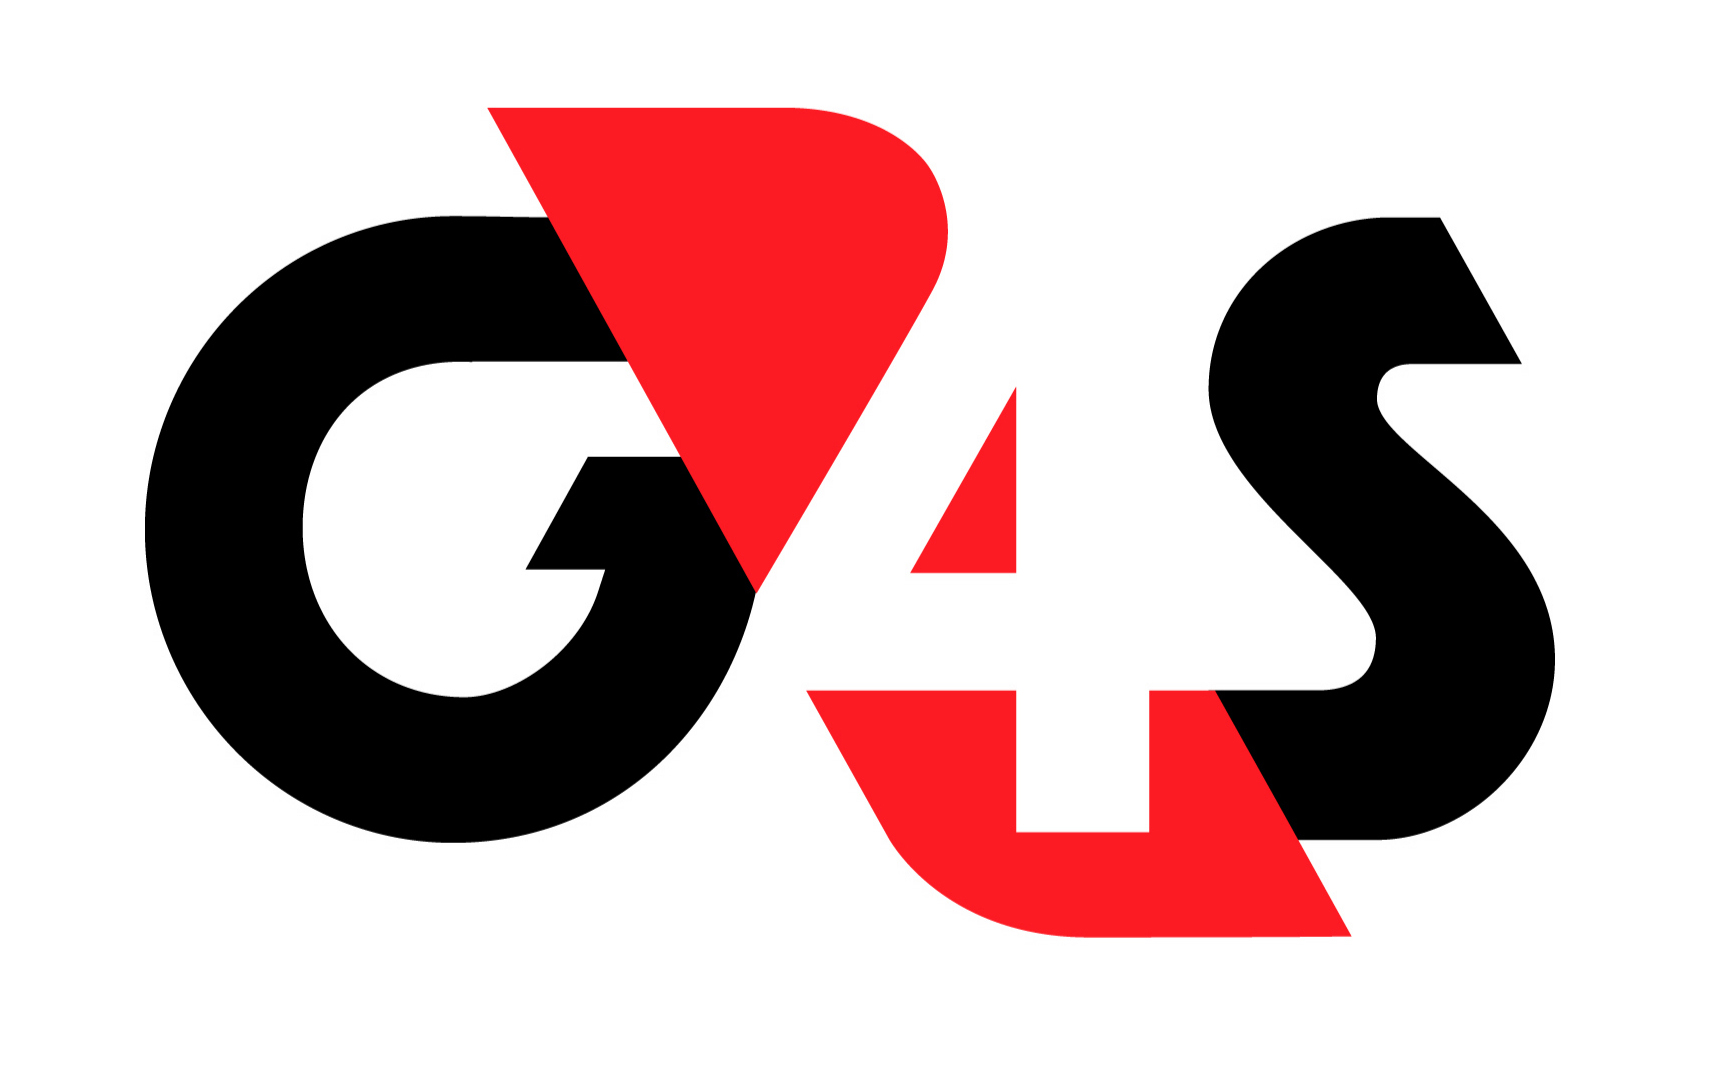 G4S_logotyp